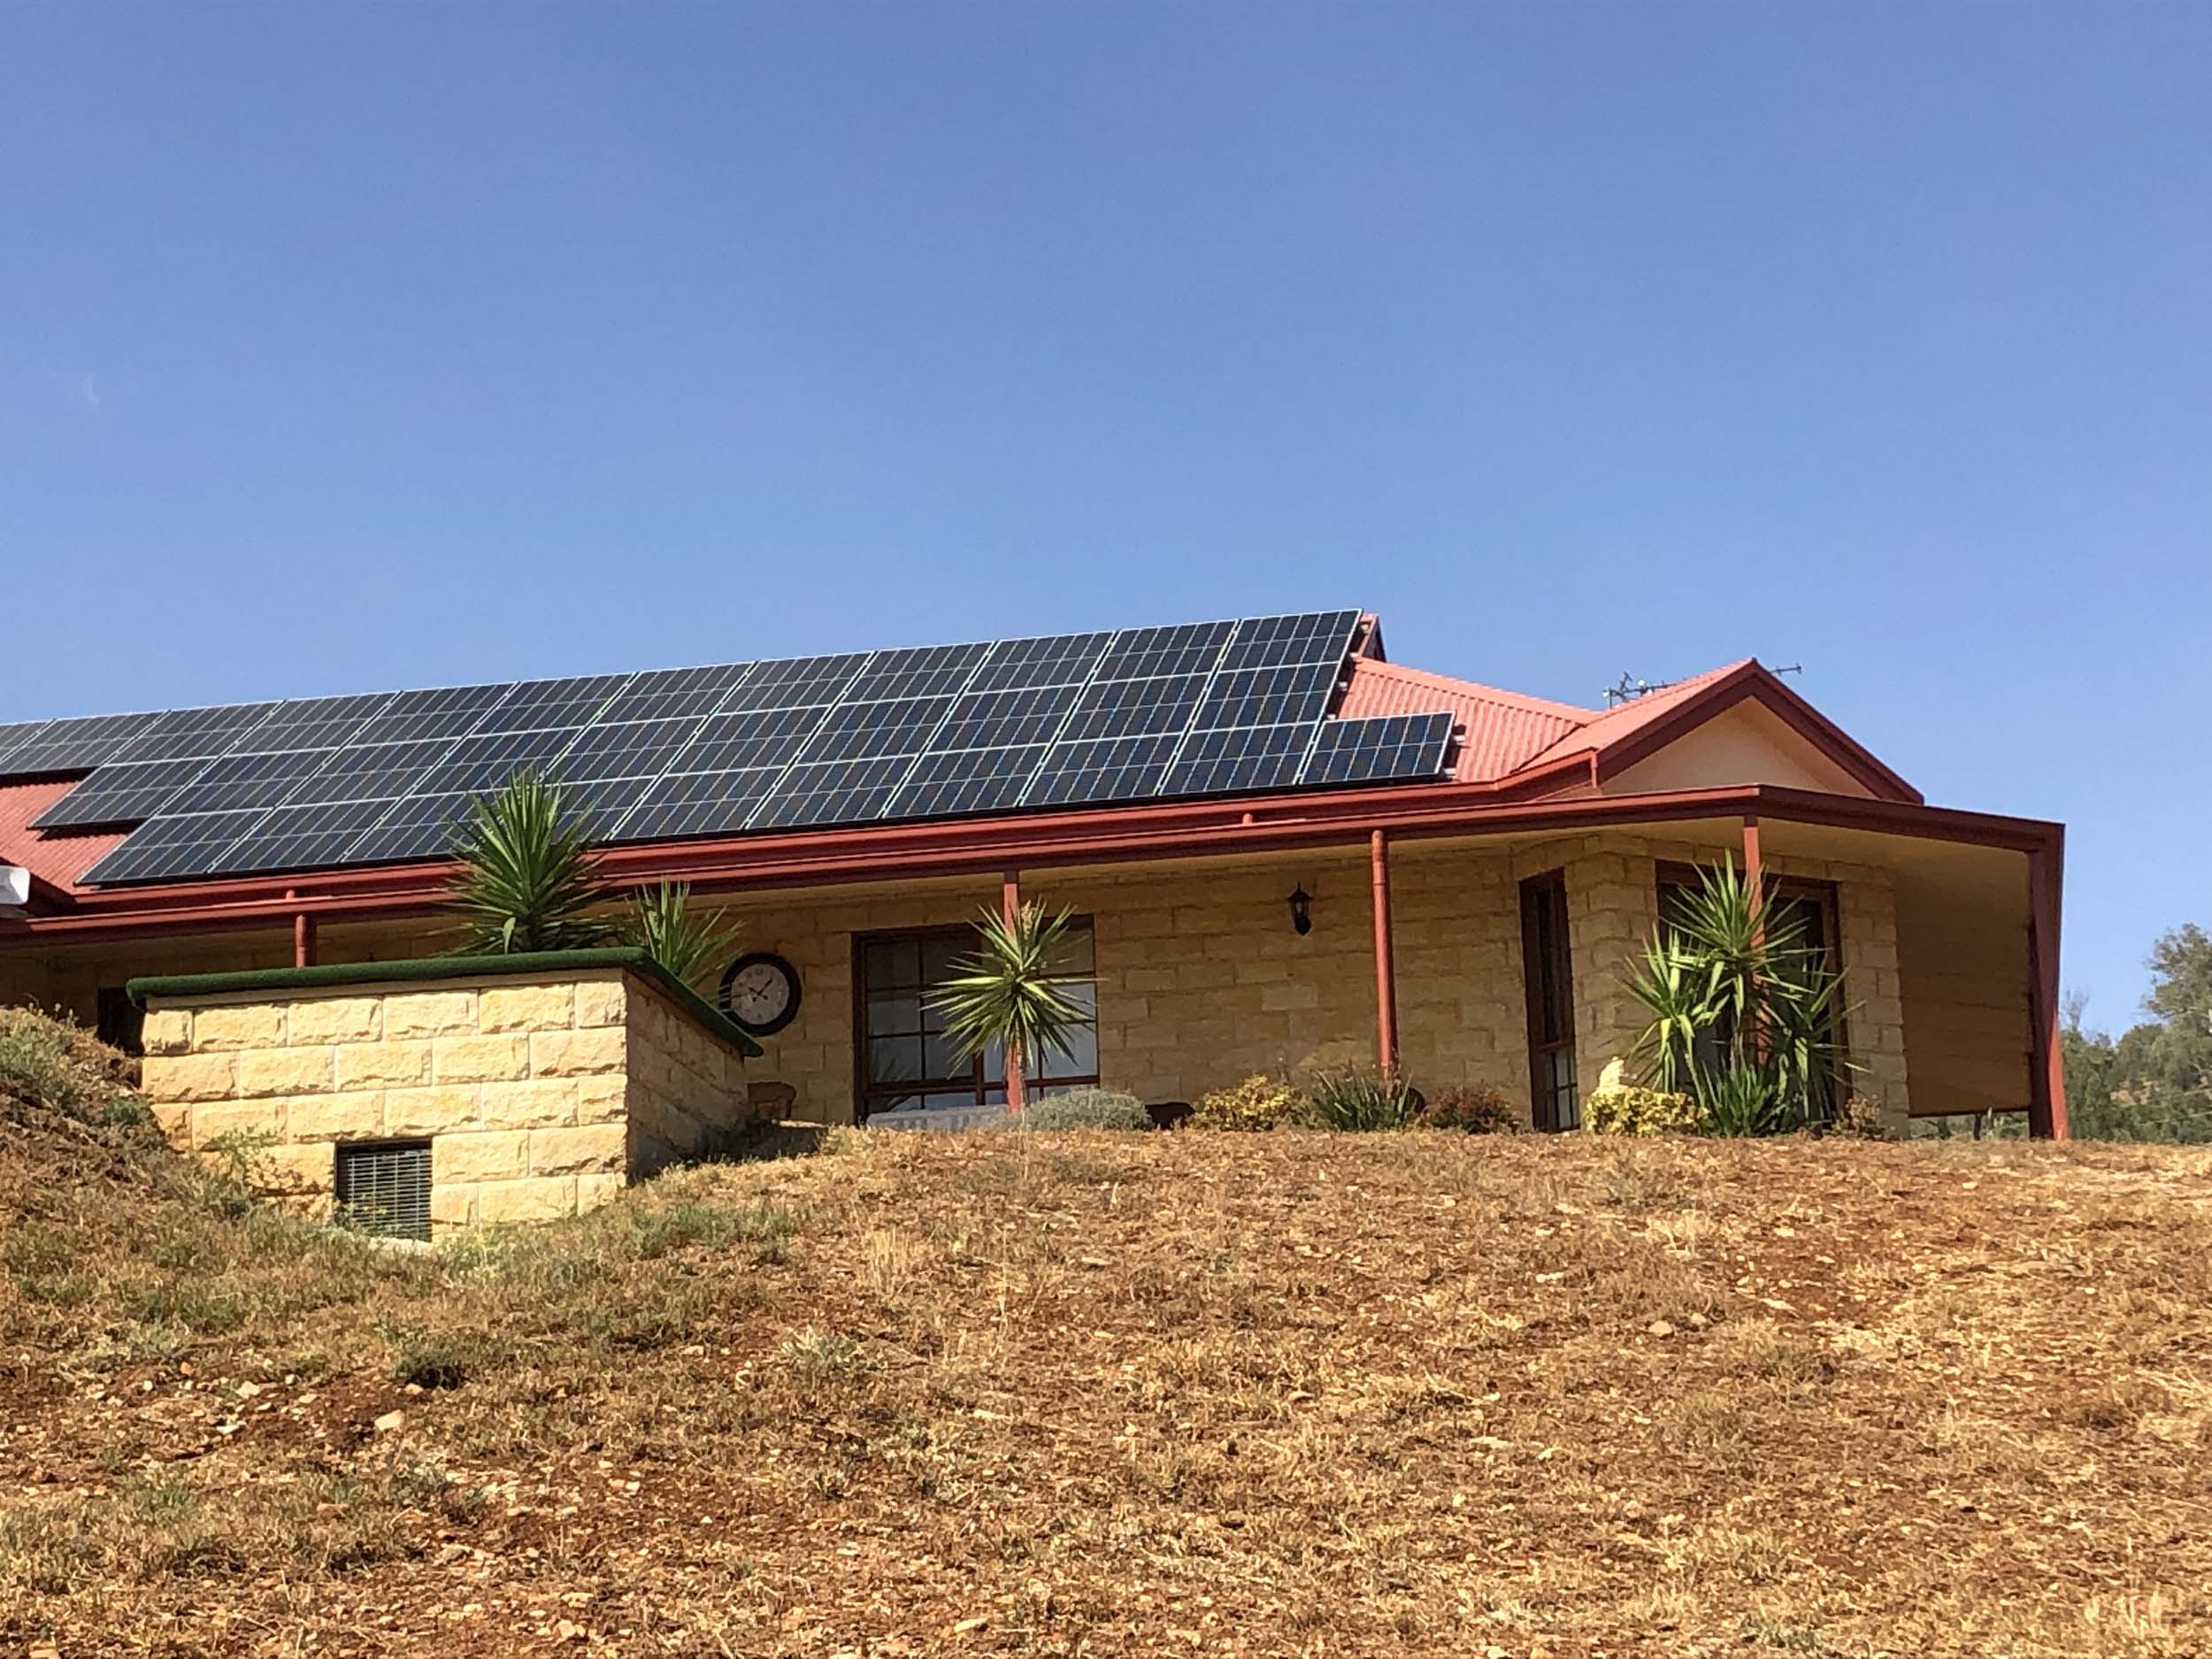 home solar panels installation australia